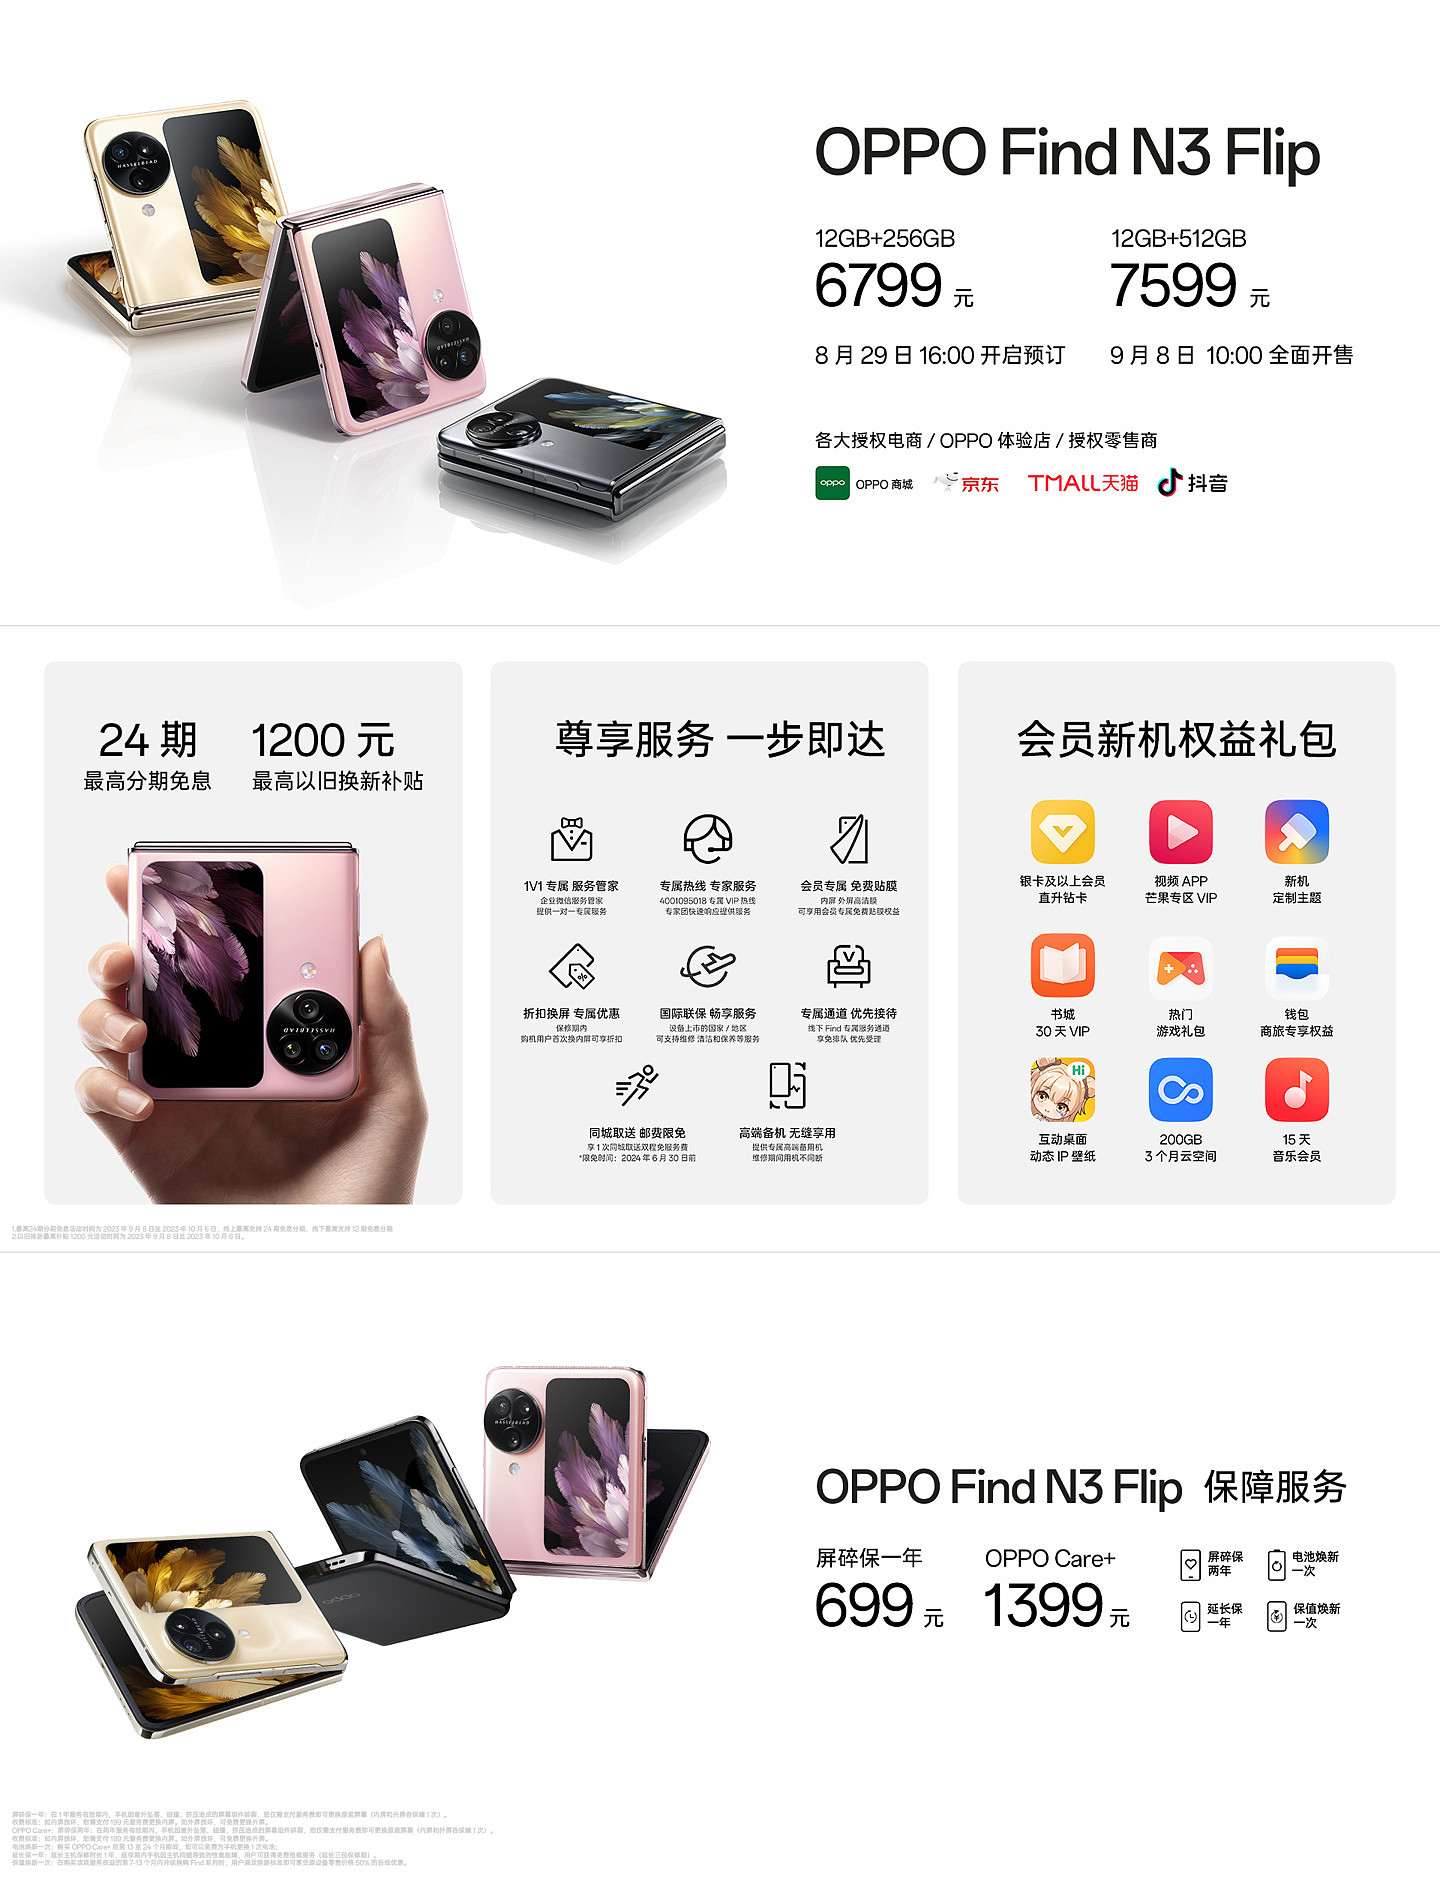 OPPO Find N3 Filp 折叠屏手机正式发布，6799 元起 - 1